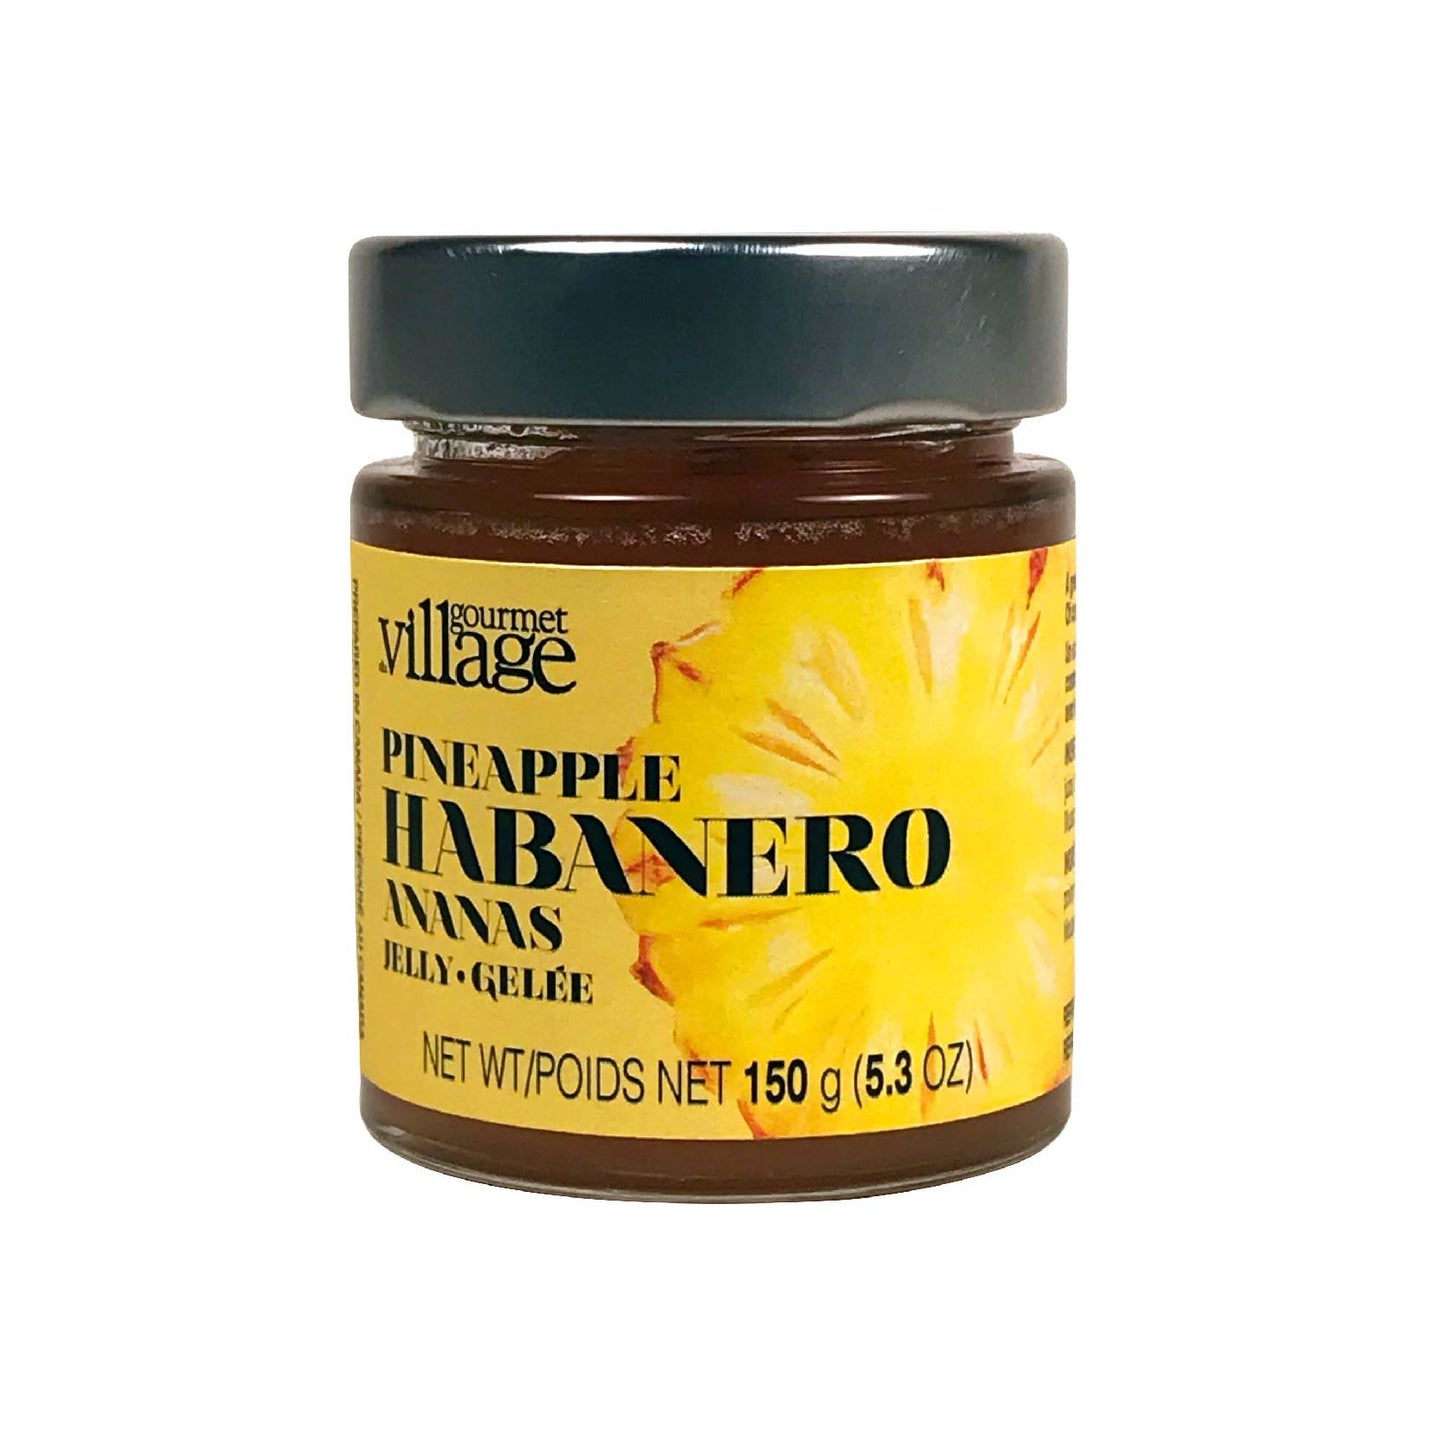 Pineapple Habanero Jelly